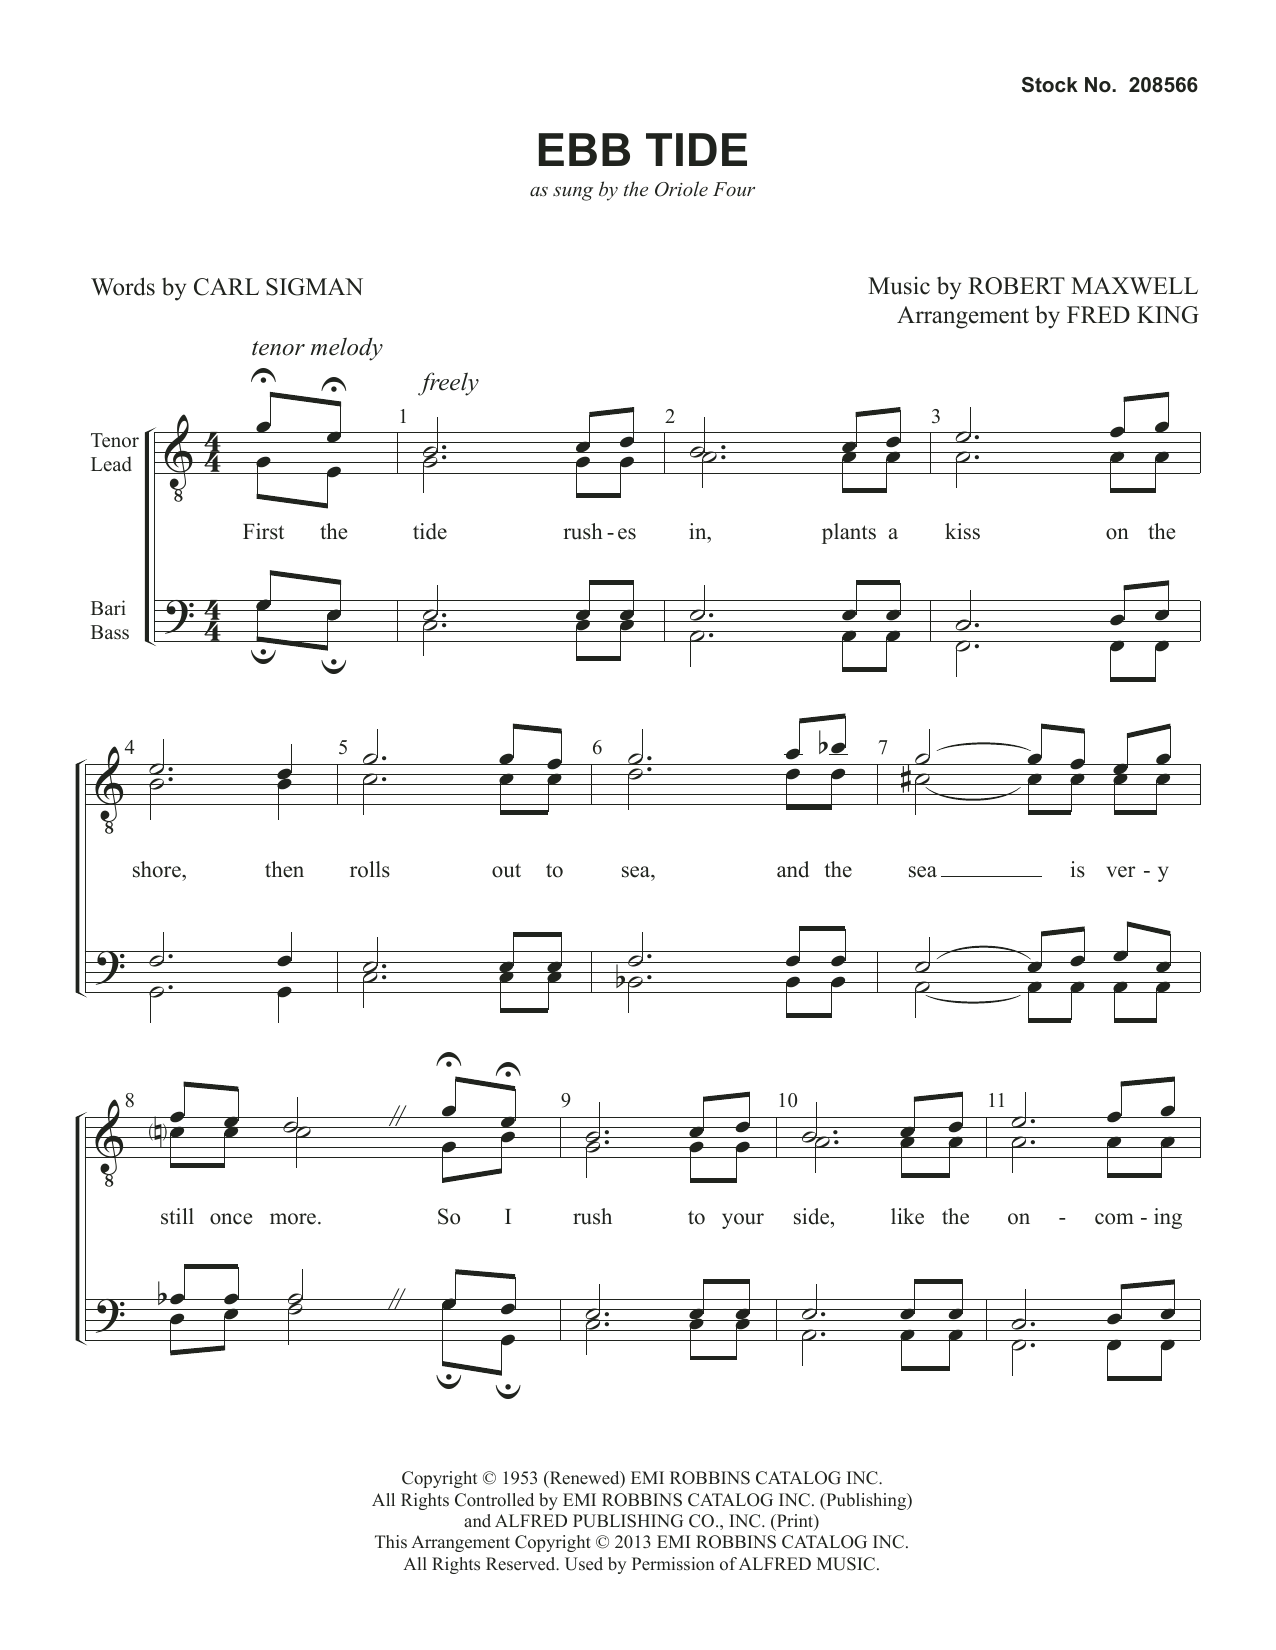 The Oriole Four Ebb Tide Sheet Music Notes & Chords for TTBB Choir - Download or Print PDF